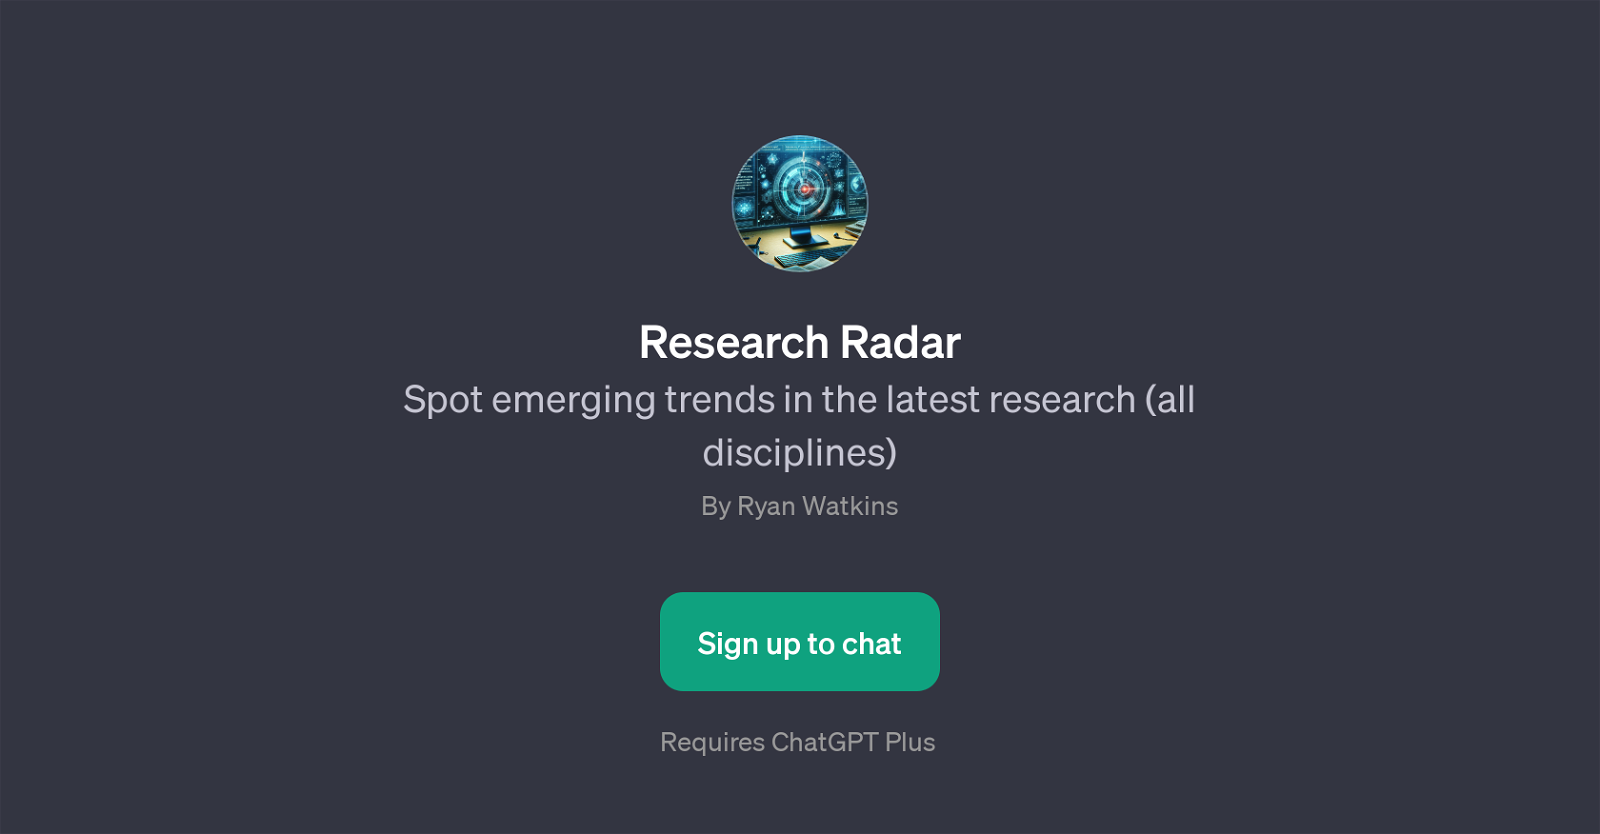 Research Radar website